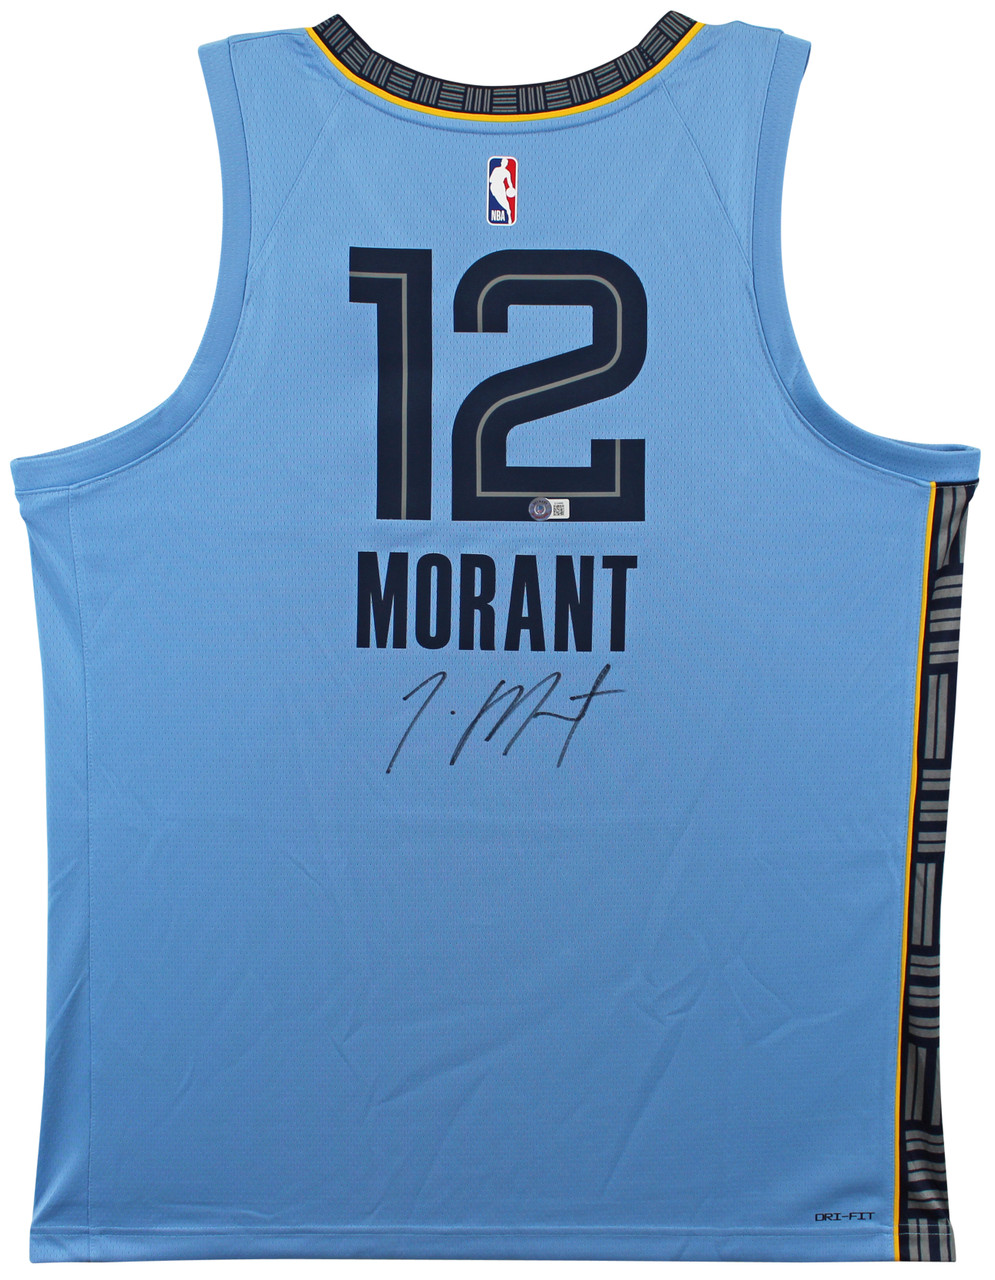 Ja Morant Jerseys, Ja Morant Shirts, Basketball Apparel, Ja Morant Gear